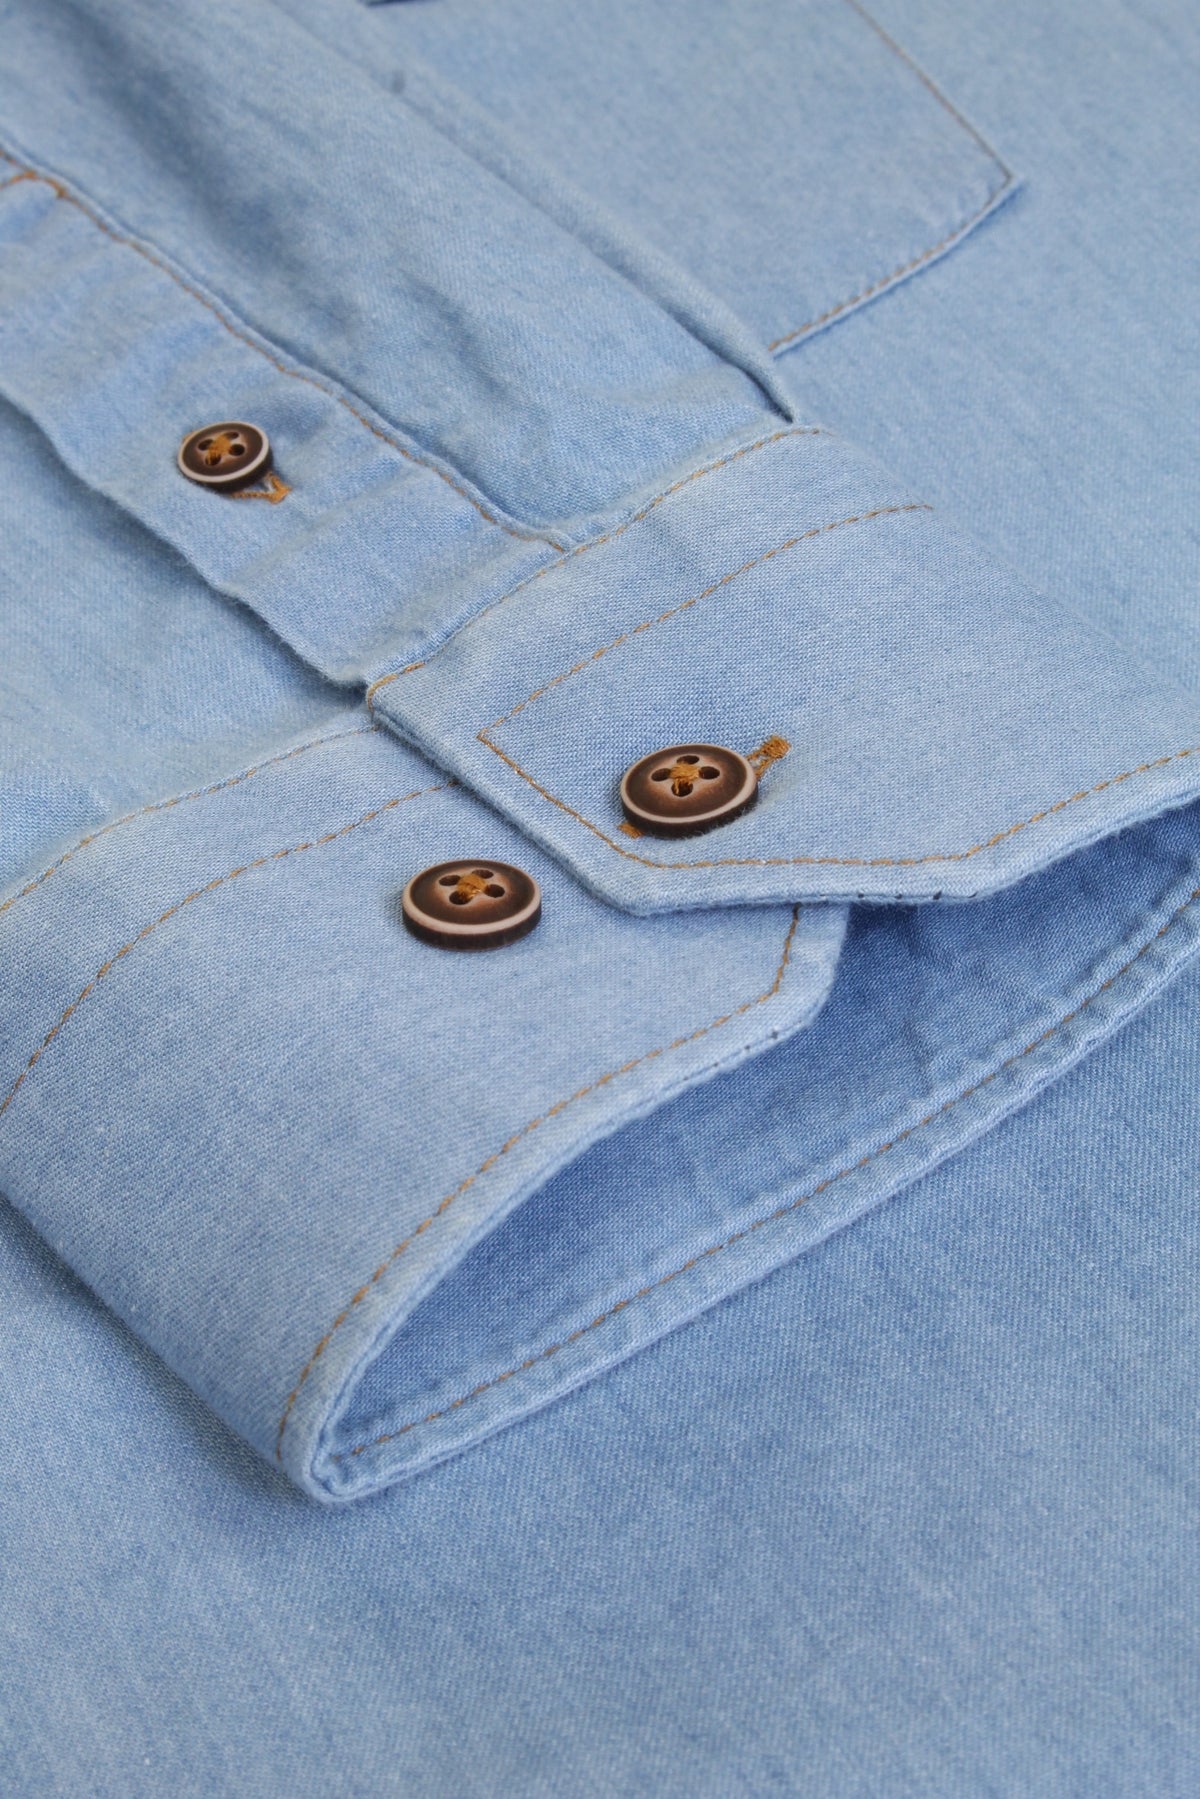 Xact Mens Long Sleeved Denim Shirt - Slim Fit, 05, Xsh1074, Blue